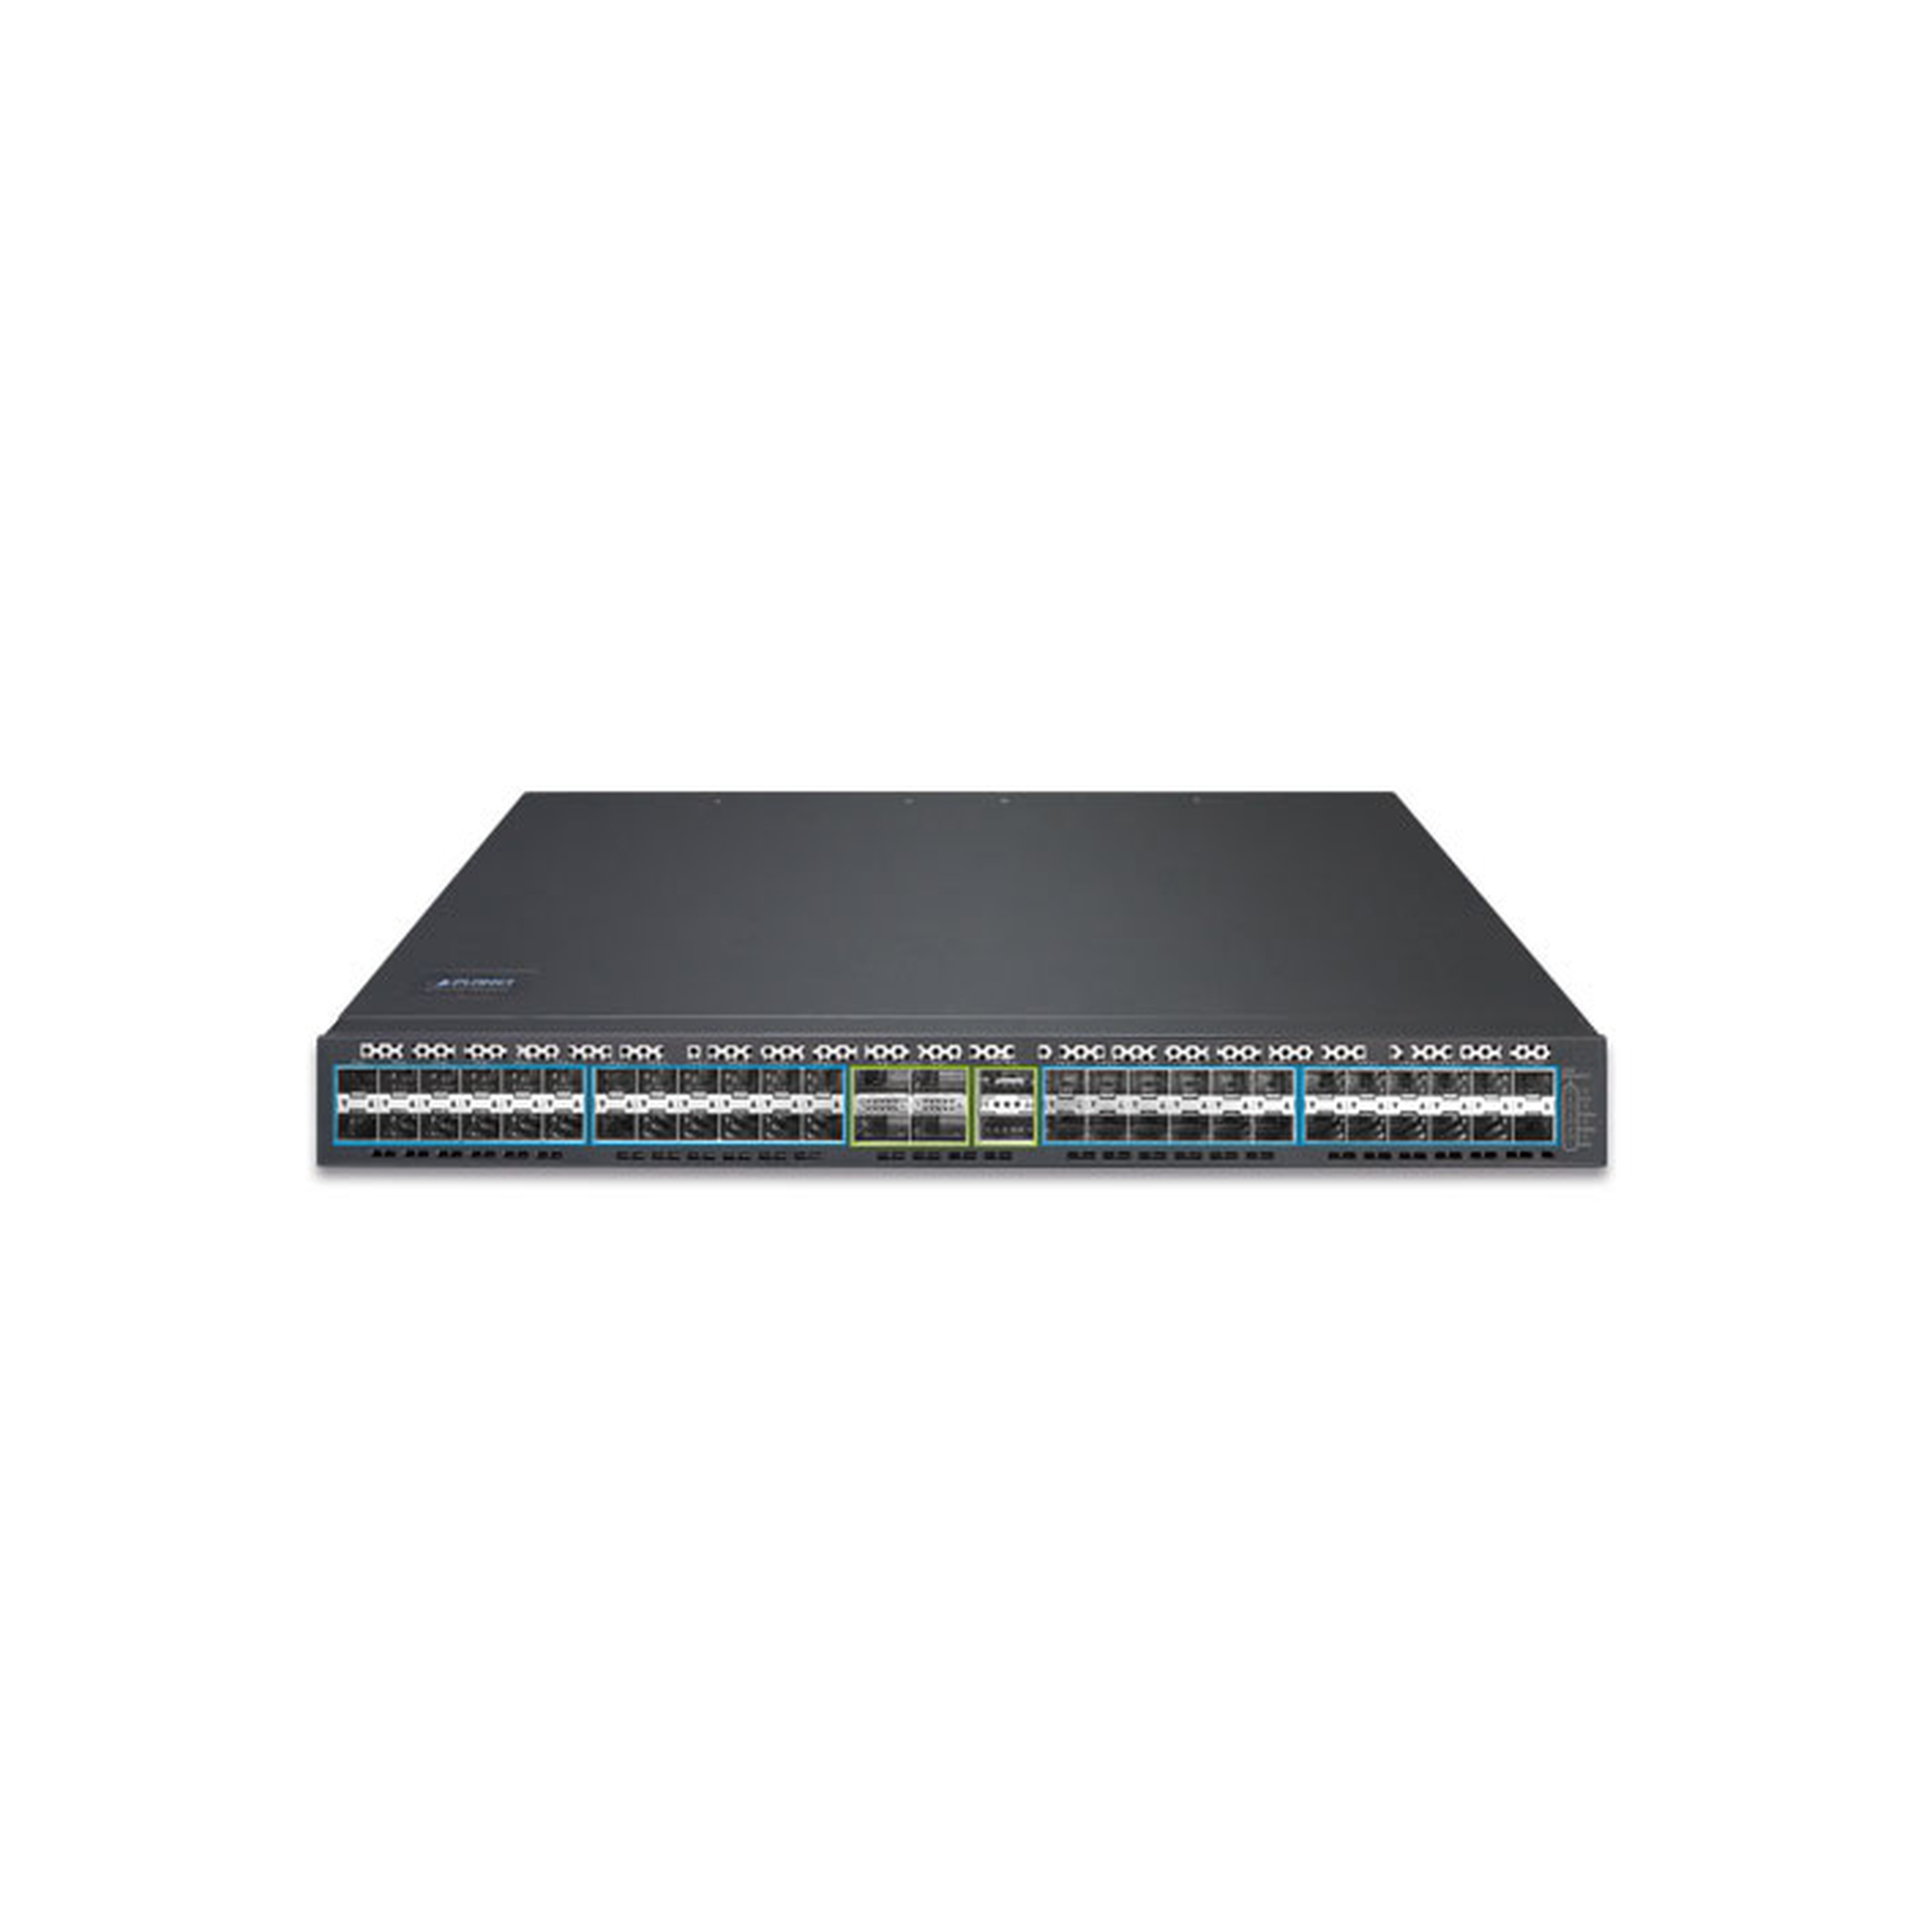 Switch Administrable Stacking Capa 3 de 48 puertos SFP de 10G+, 2 Puertos QSFP+ de 40G, 4 Puertos QSFP28 de 100G, Capacidad de Conmutación de Hasta 1.92Tbps